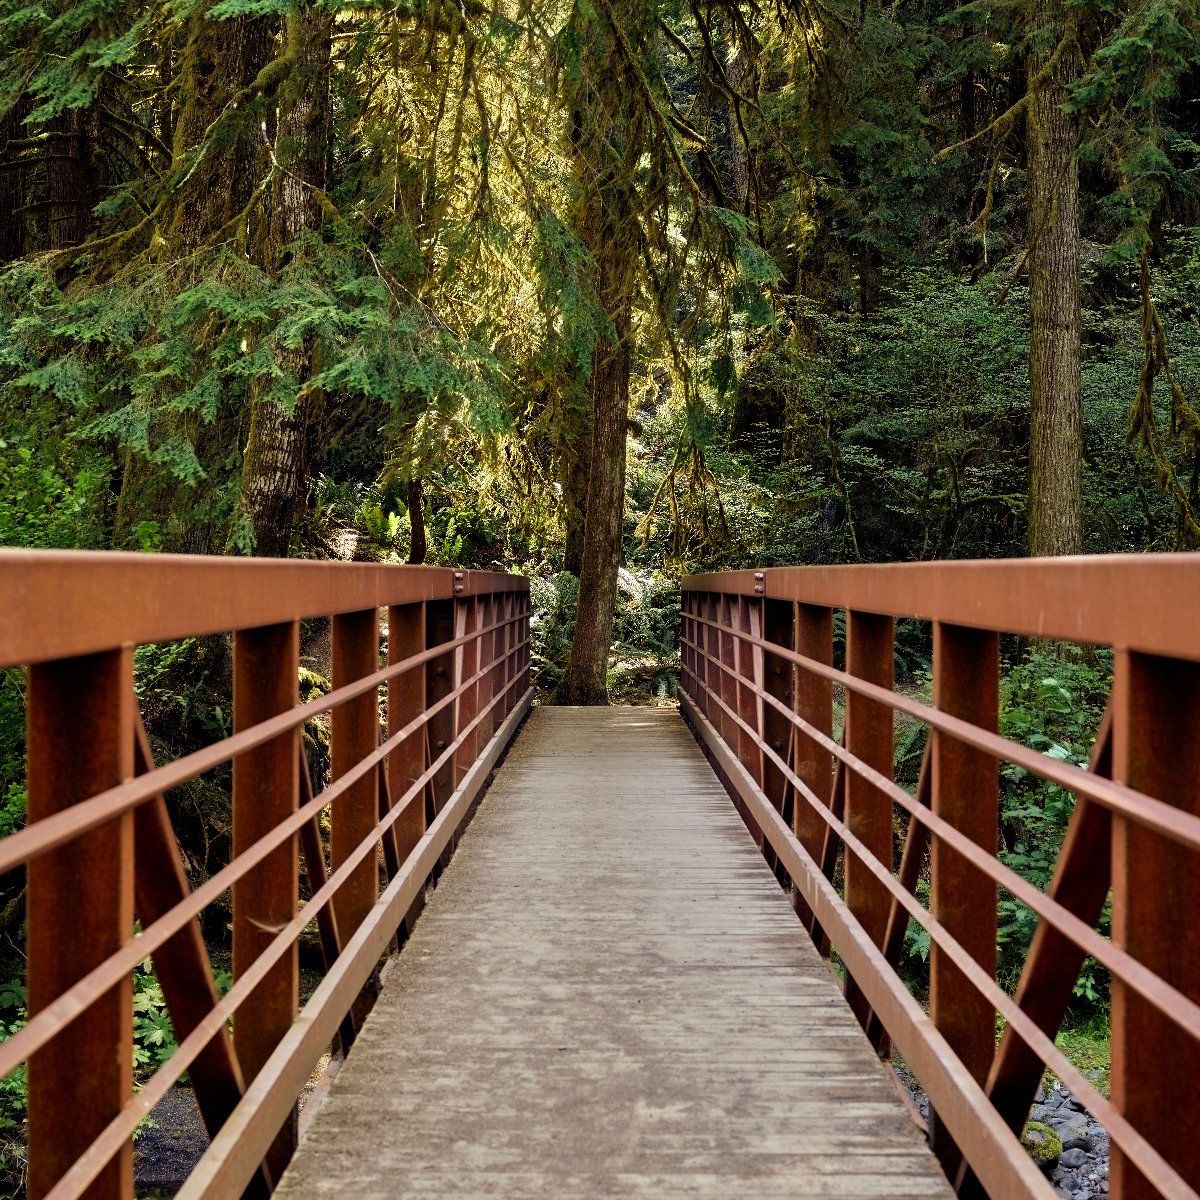 Rostige Brücke im Wald